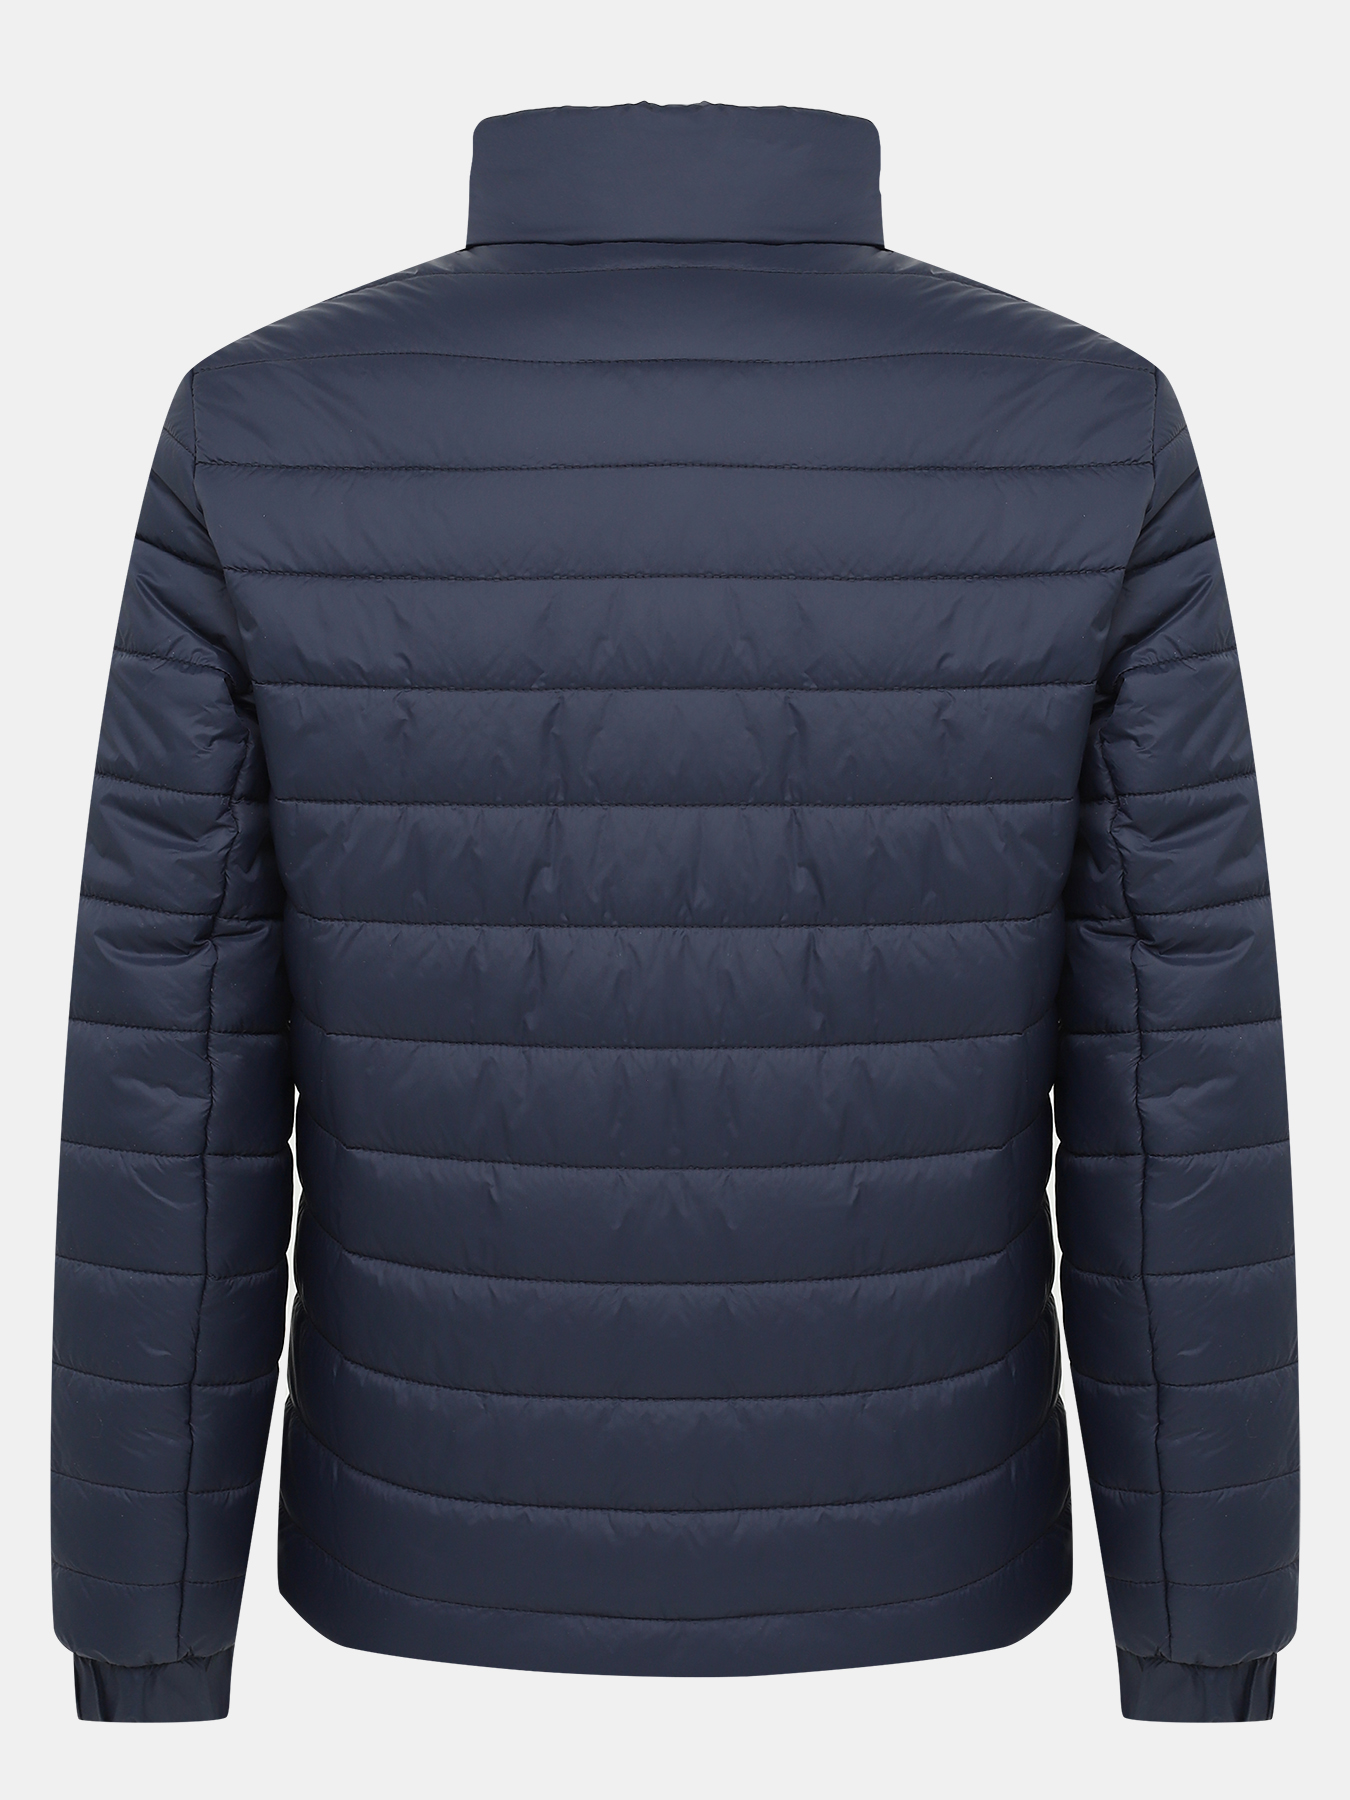 Куртка Benti HUGO 437018-043, цвет темно-синий, размер 48-50 - фото 5